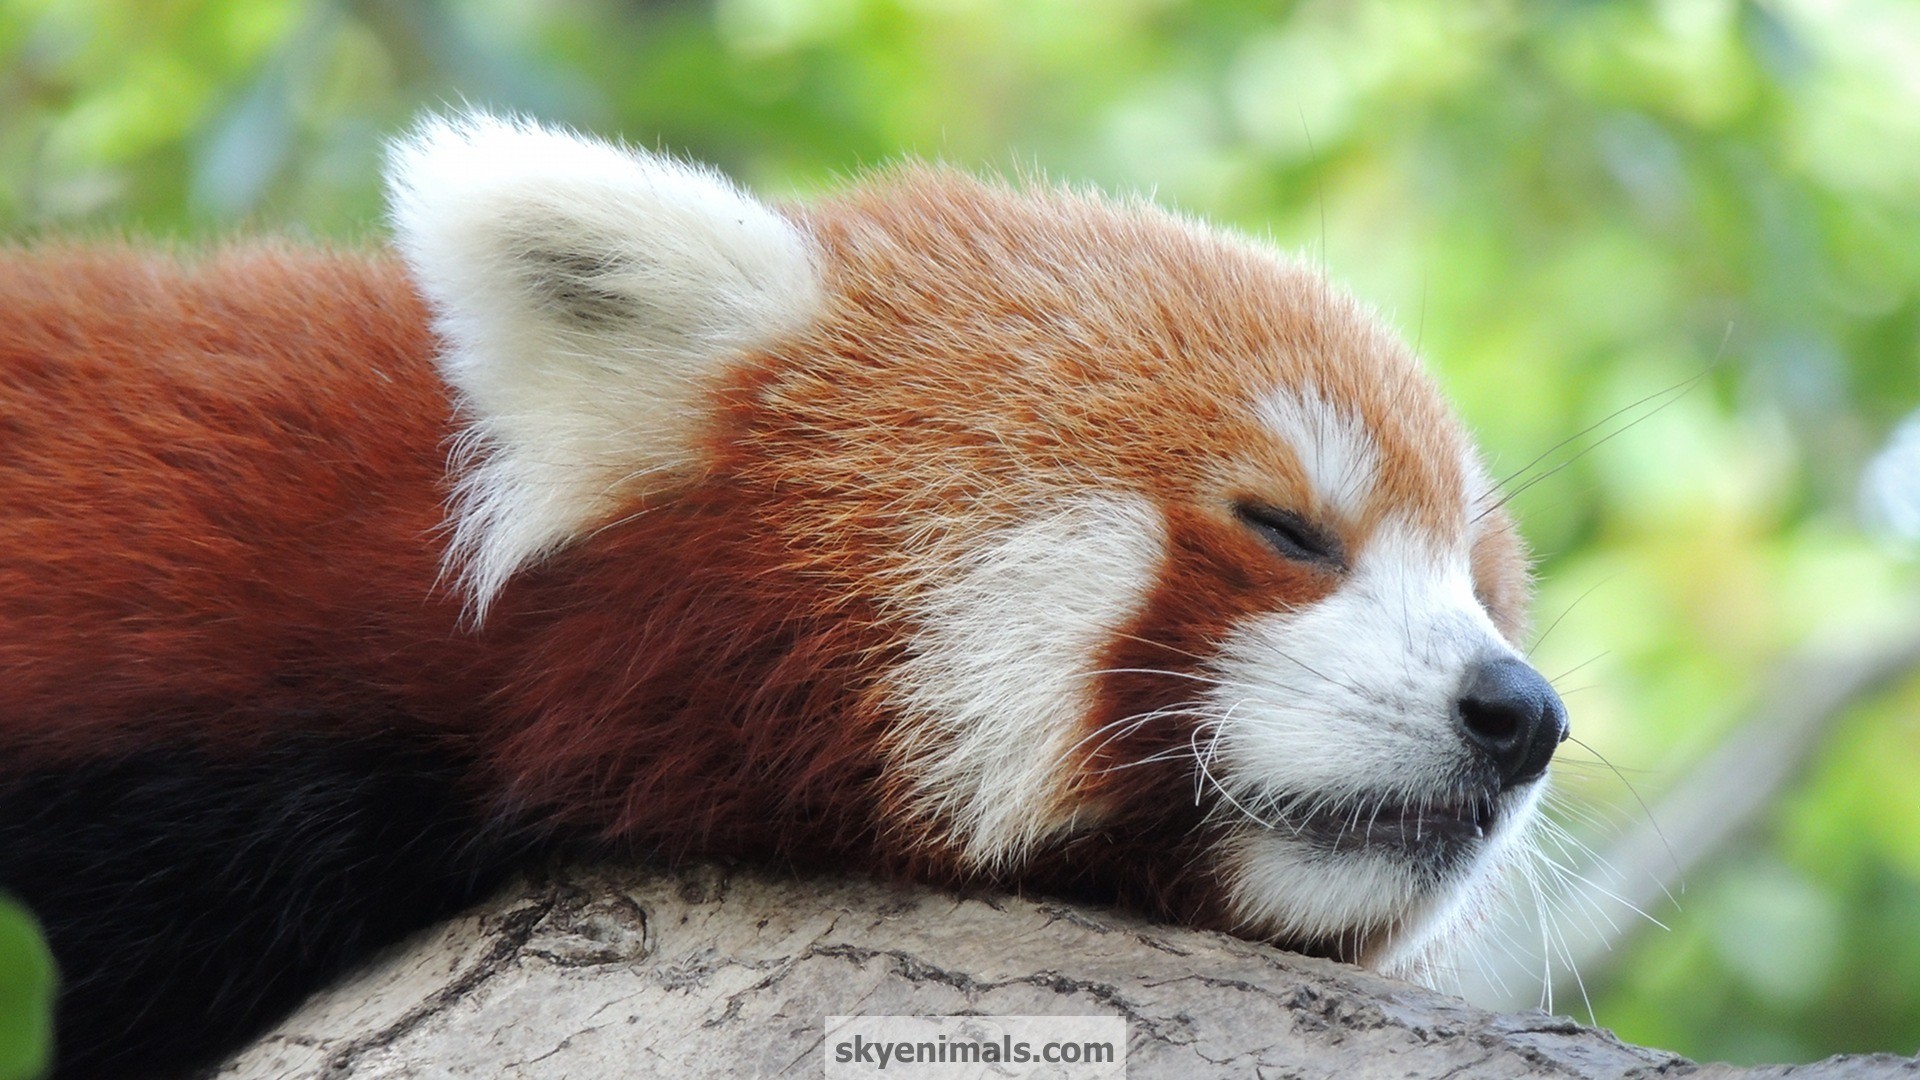 Cute Sleeping Panda Wallpapers